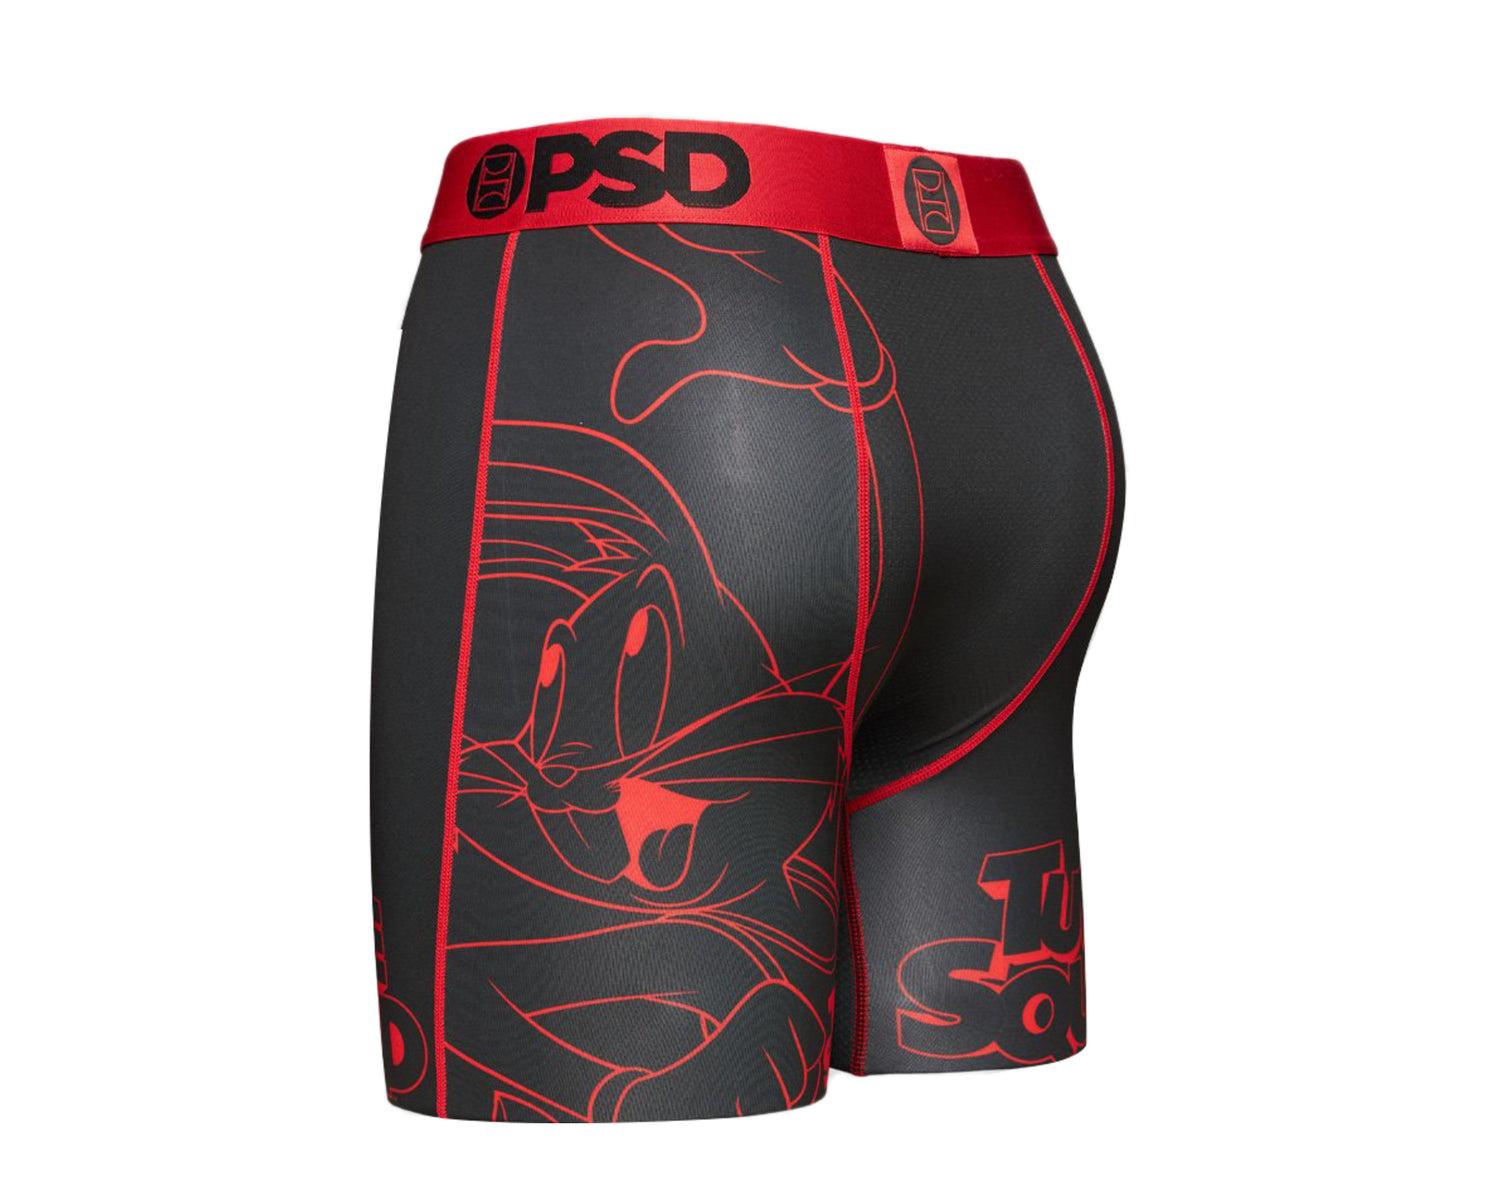 PSD Bugs Bunny Outline Boxer Briefs Men's Underwear